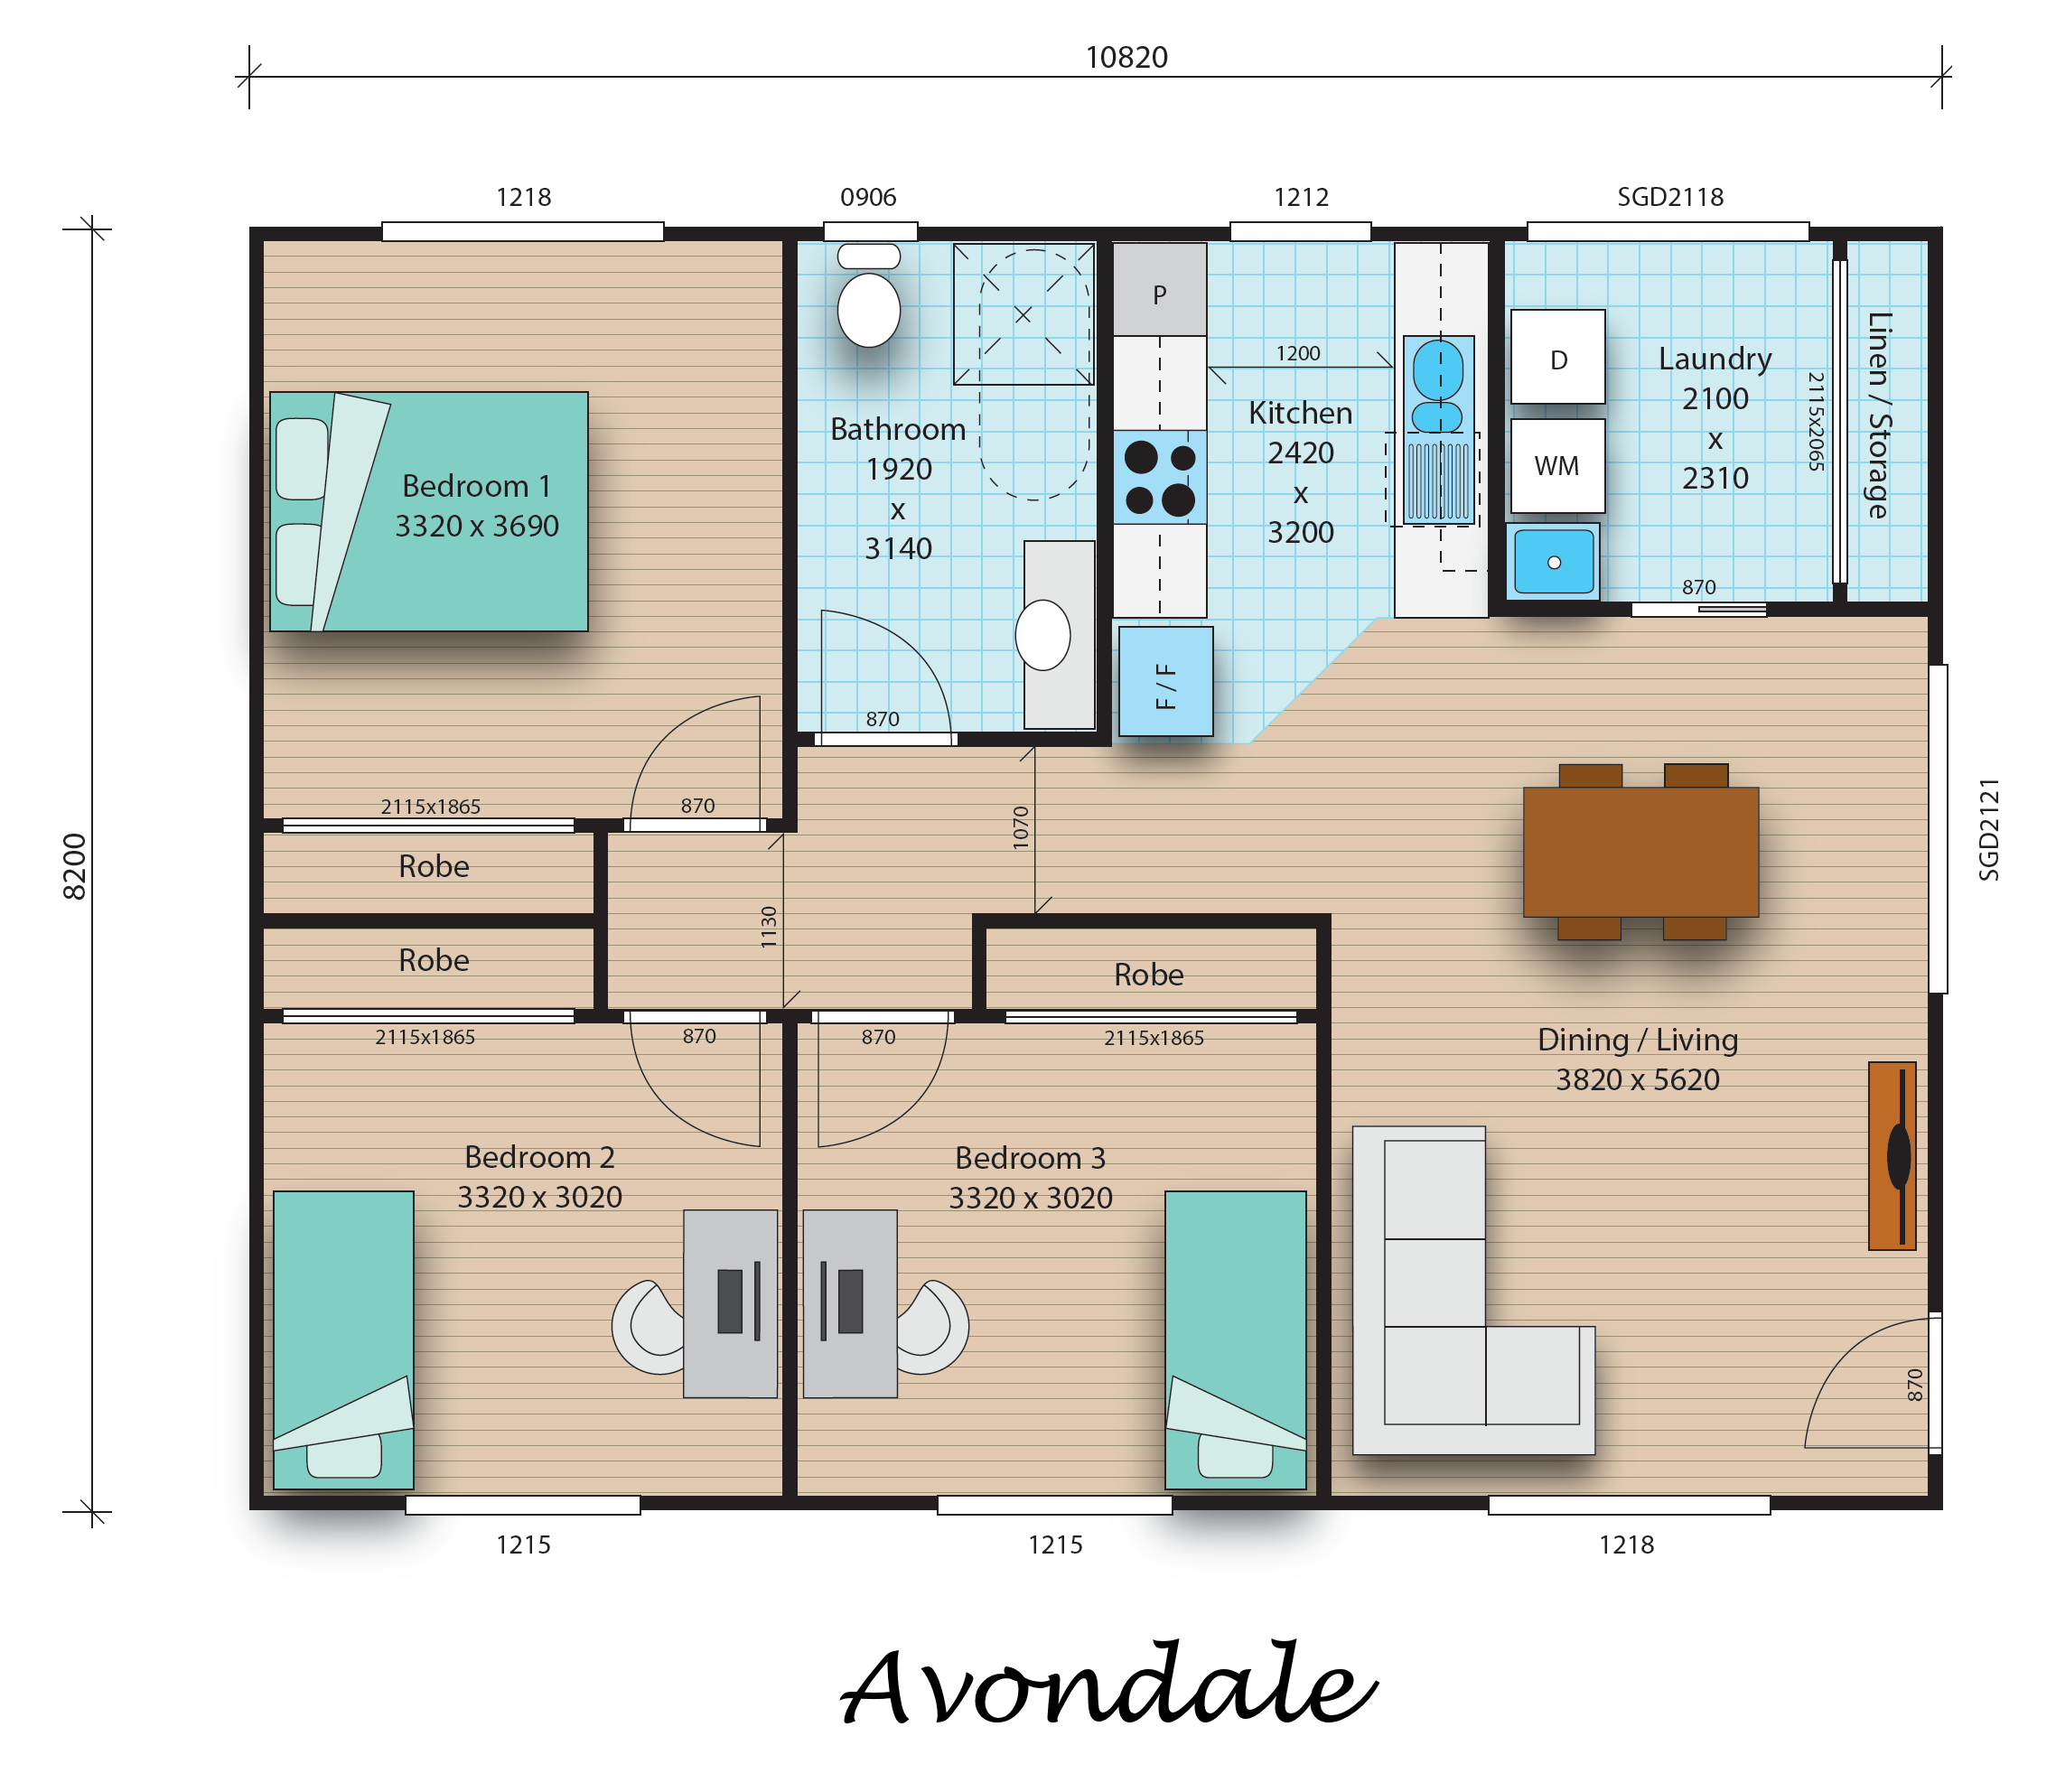 Avondale floorplan image